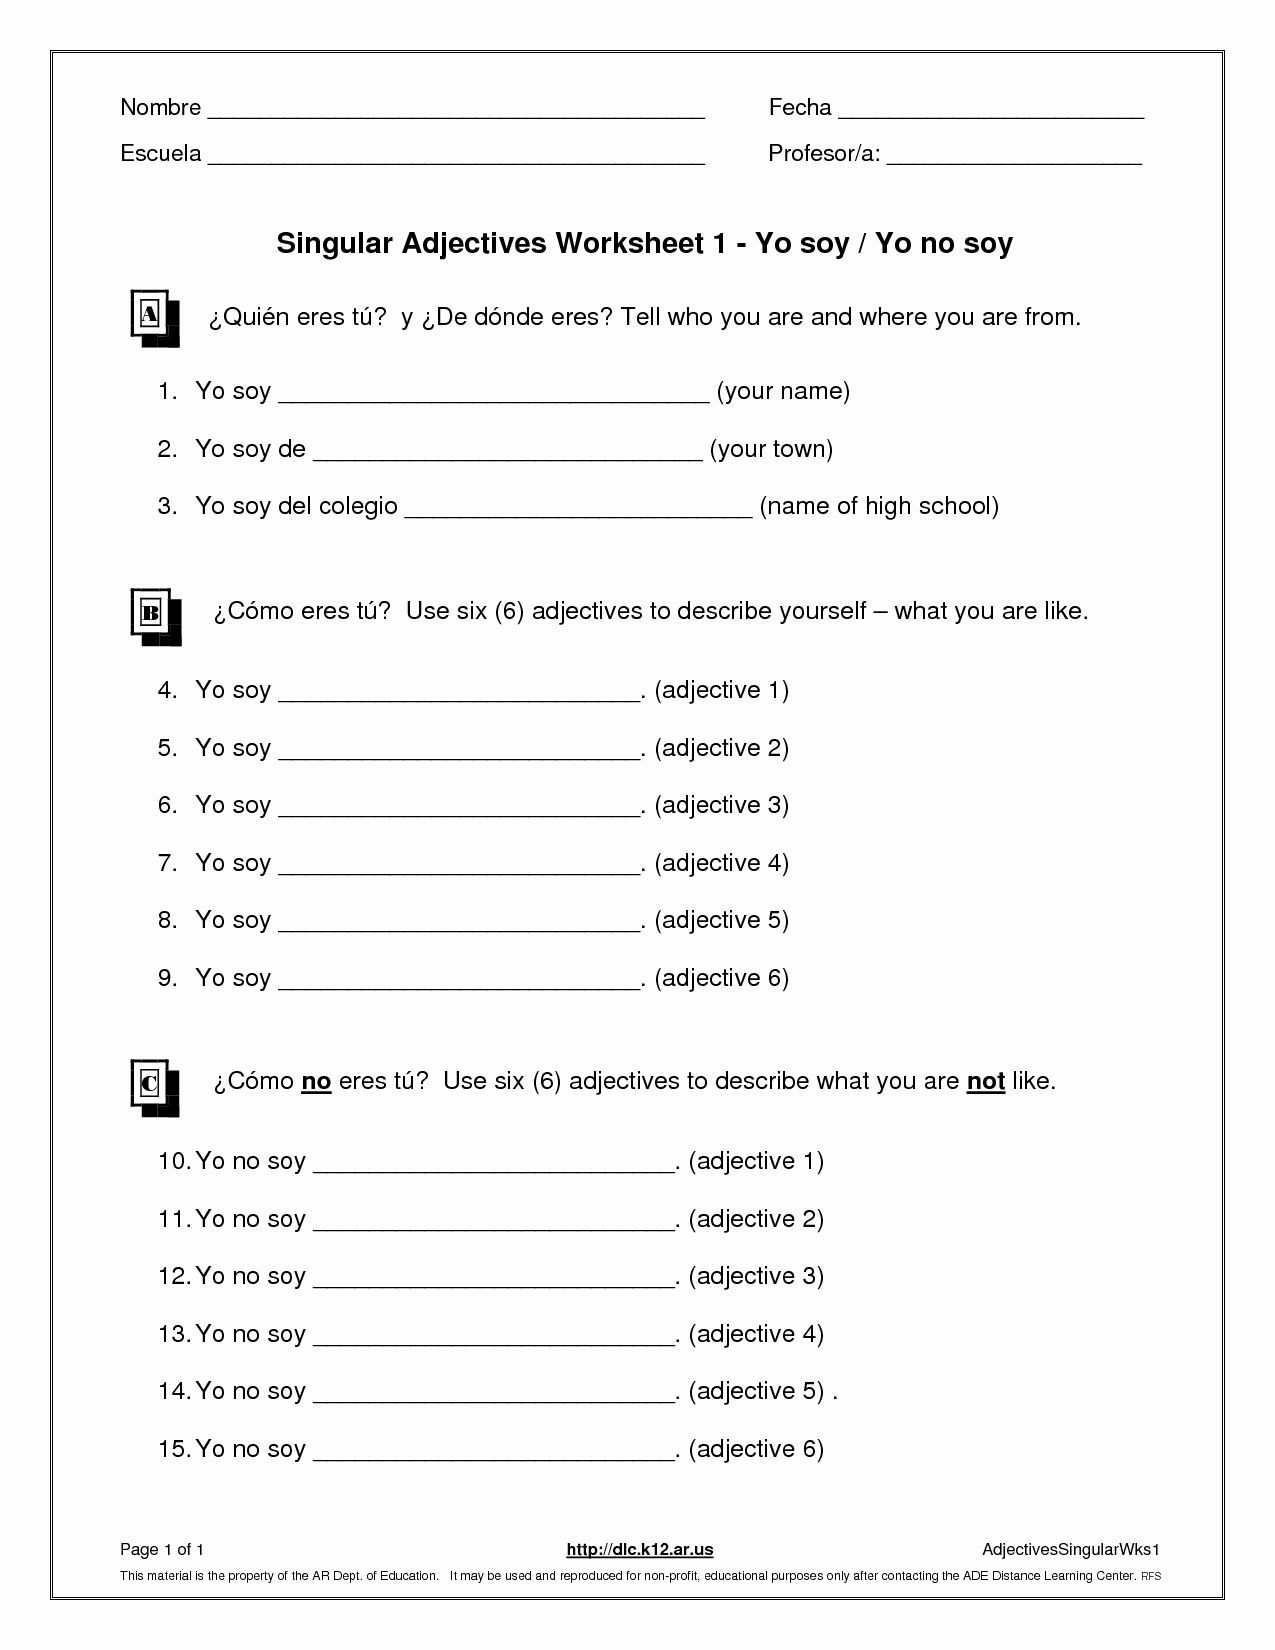 Anger Management Worksheet for Teens 50 Anger Management Worksheet for Teens In 2020 with Images